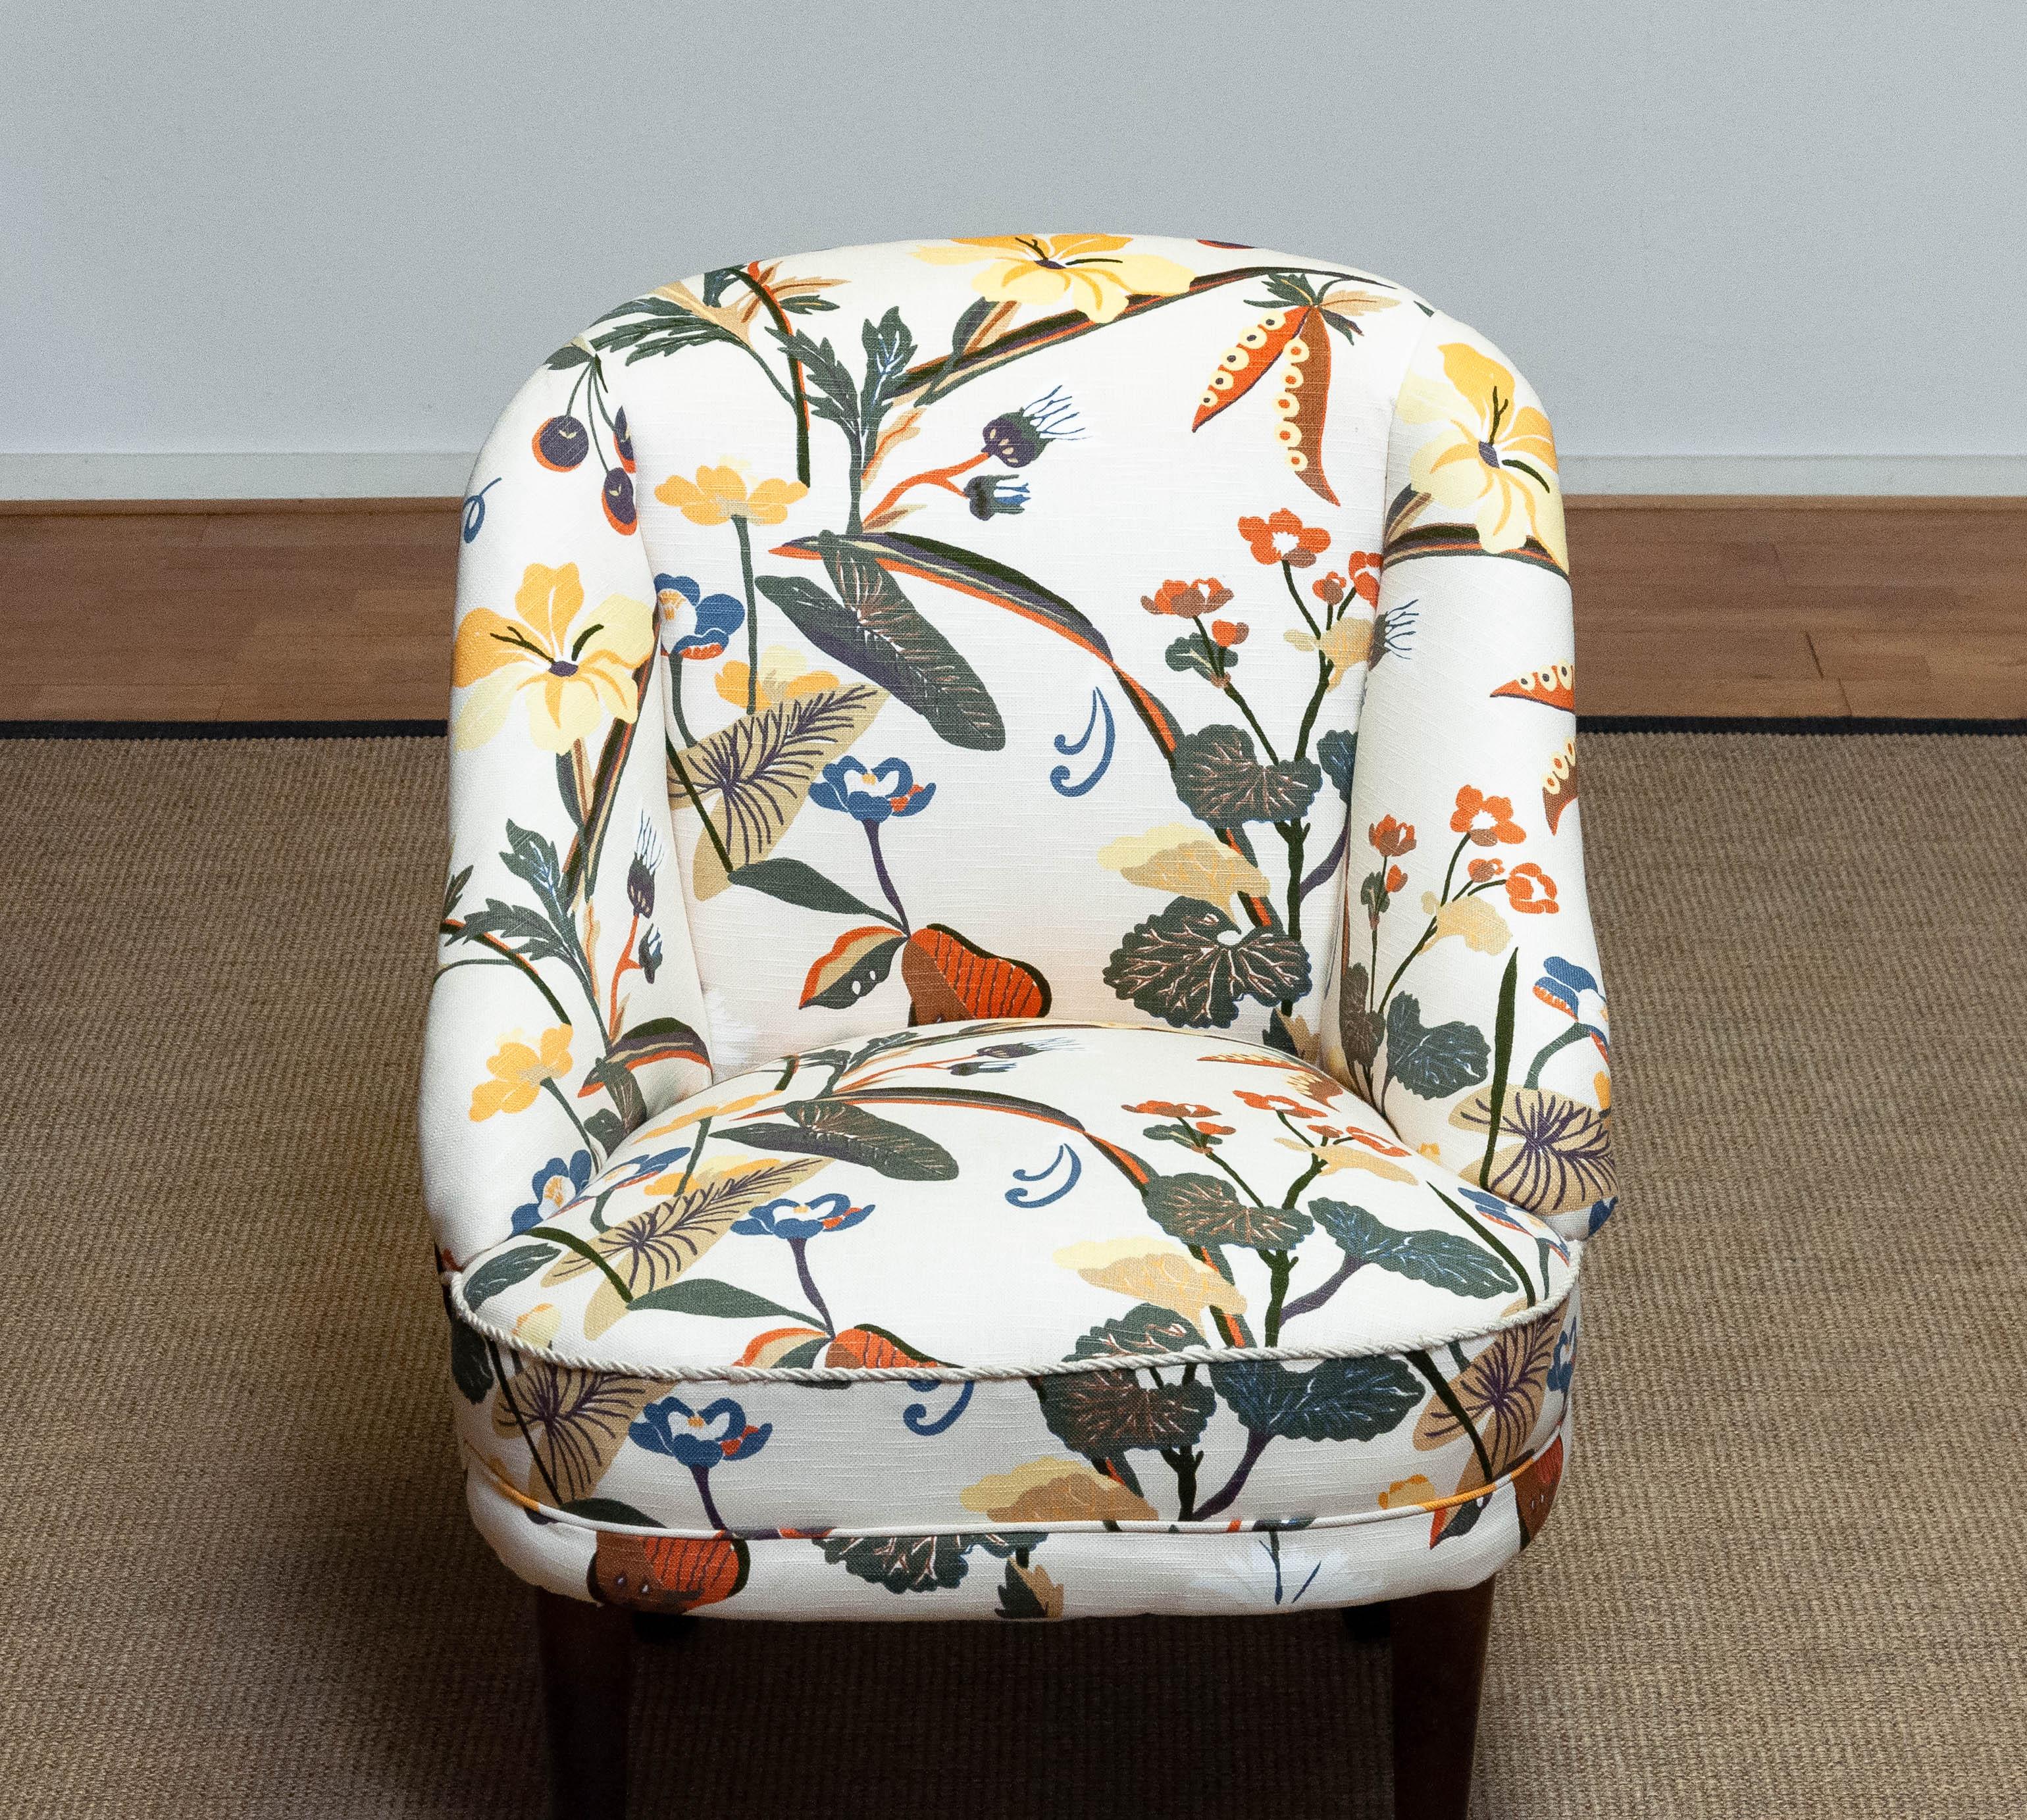 '40s Floral Printed Linen, J. Frank Style, New Upholstered Danish Slipper Chair For Sale 6